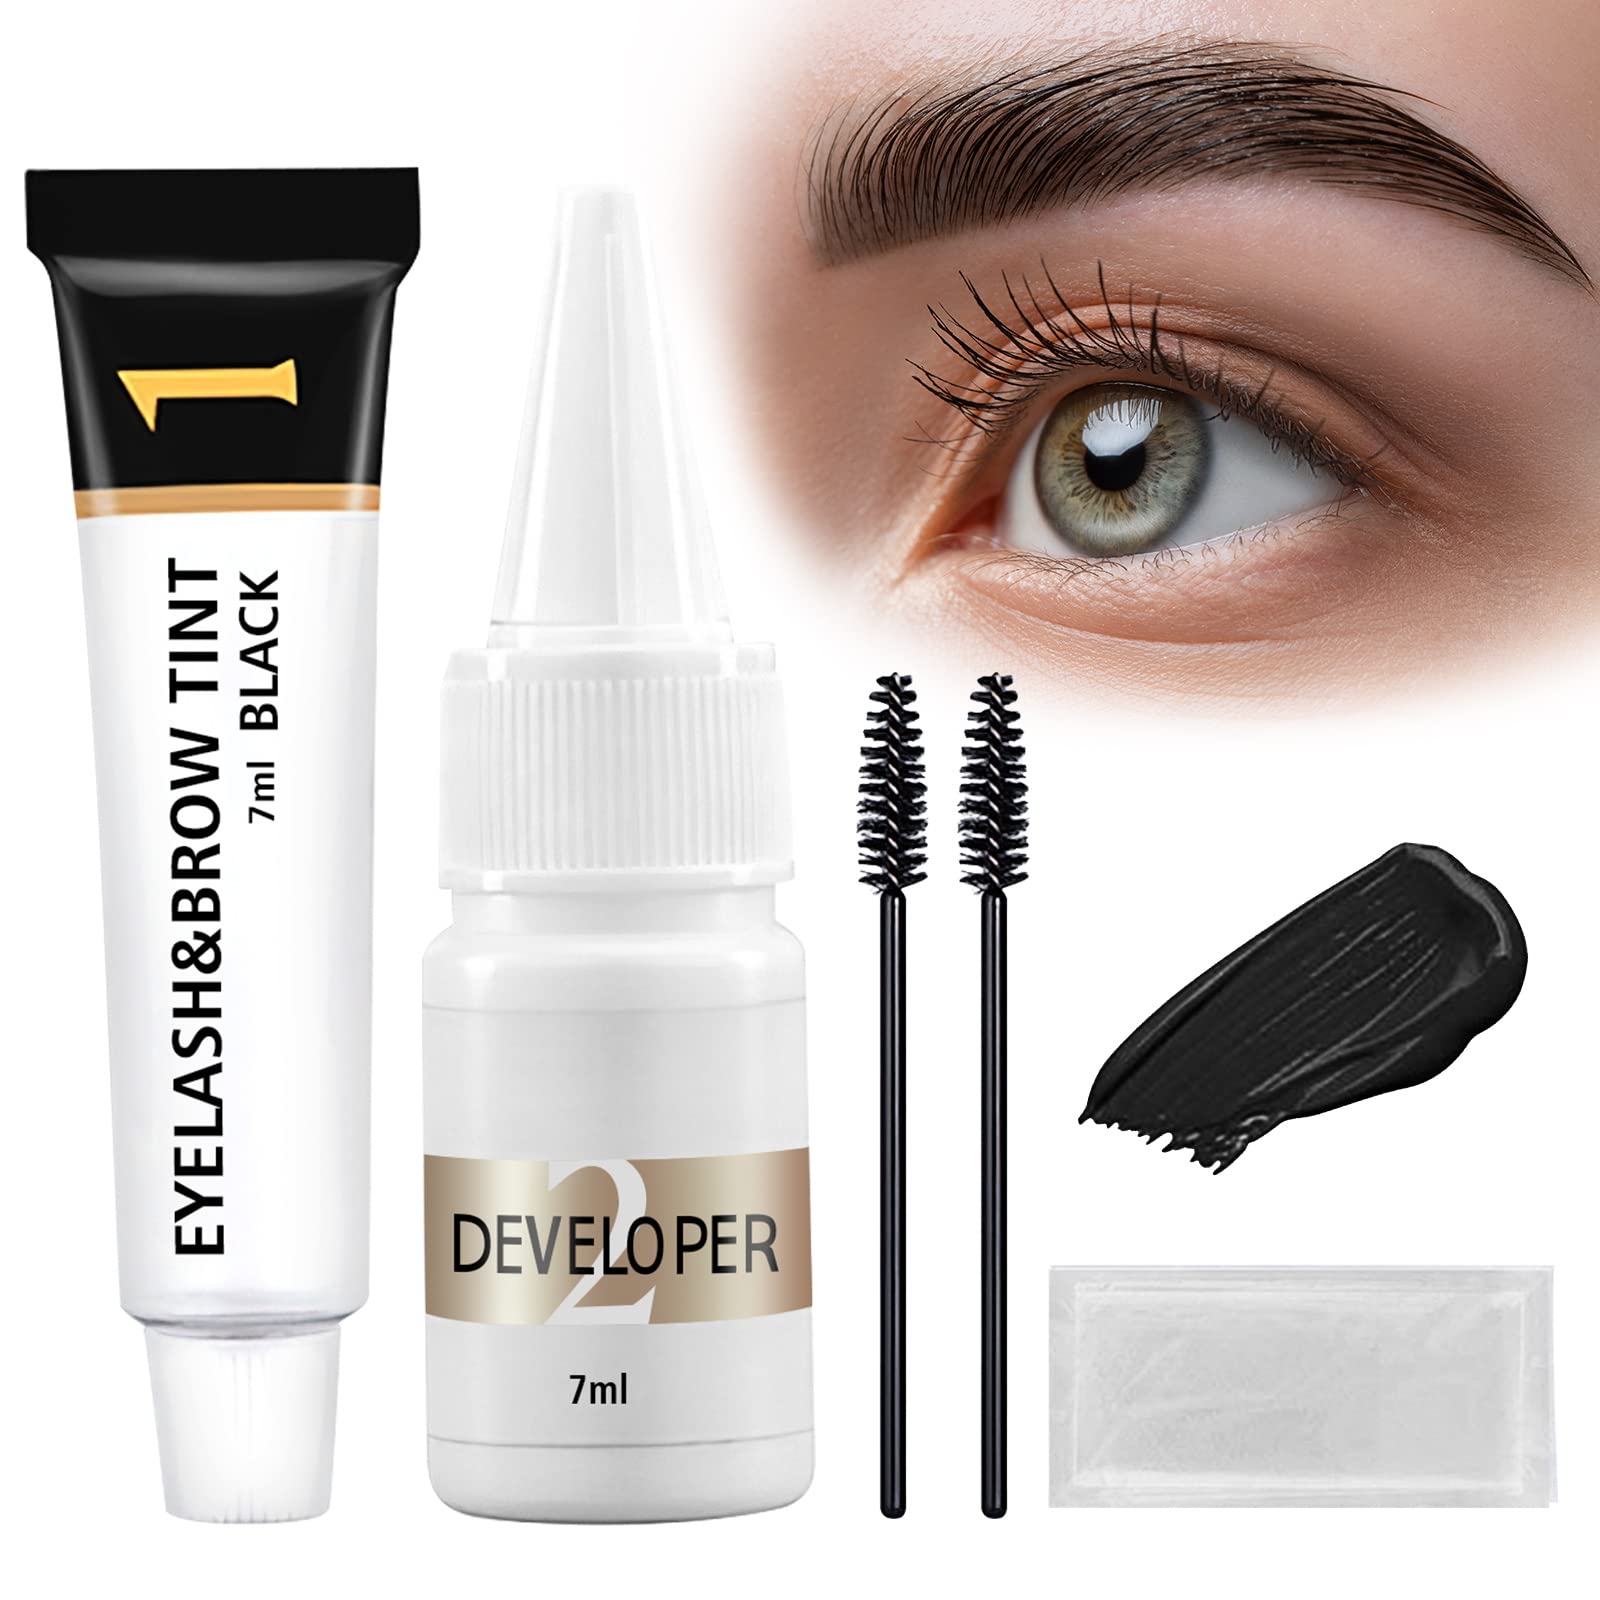 Eyebrow Tinting Kit 2 In 1 Semi-Permanent Lash & Brow Coloring Kit